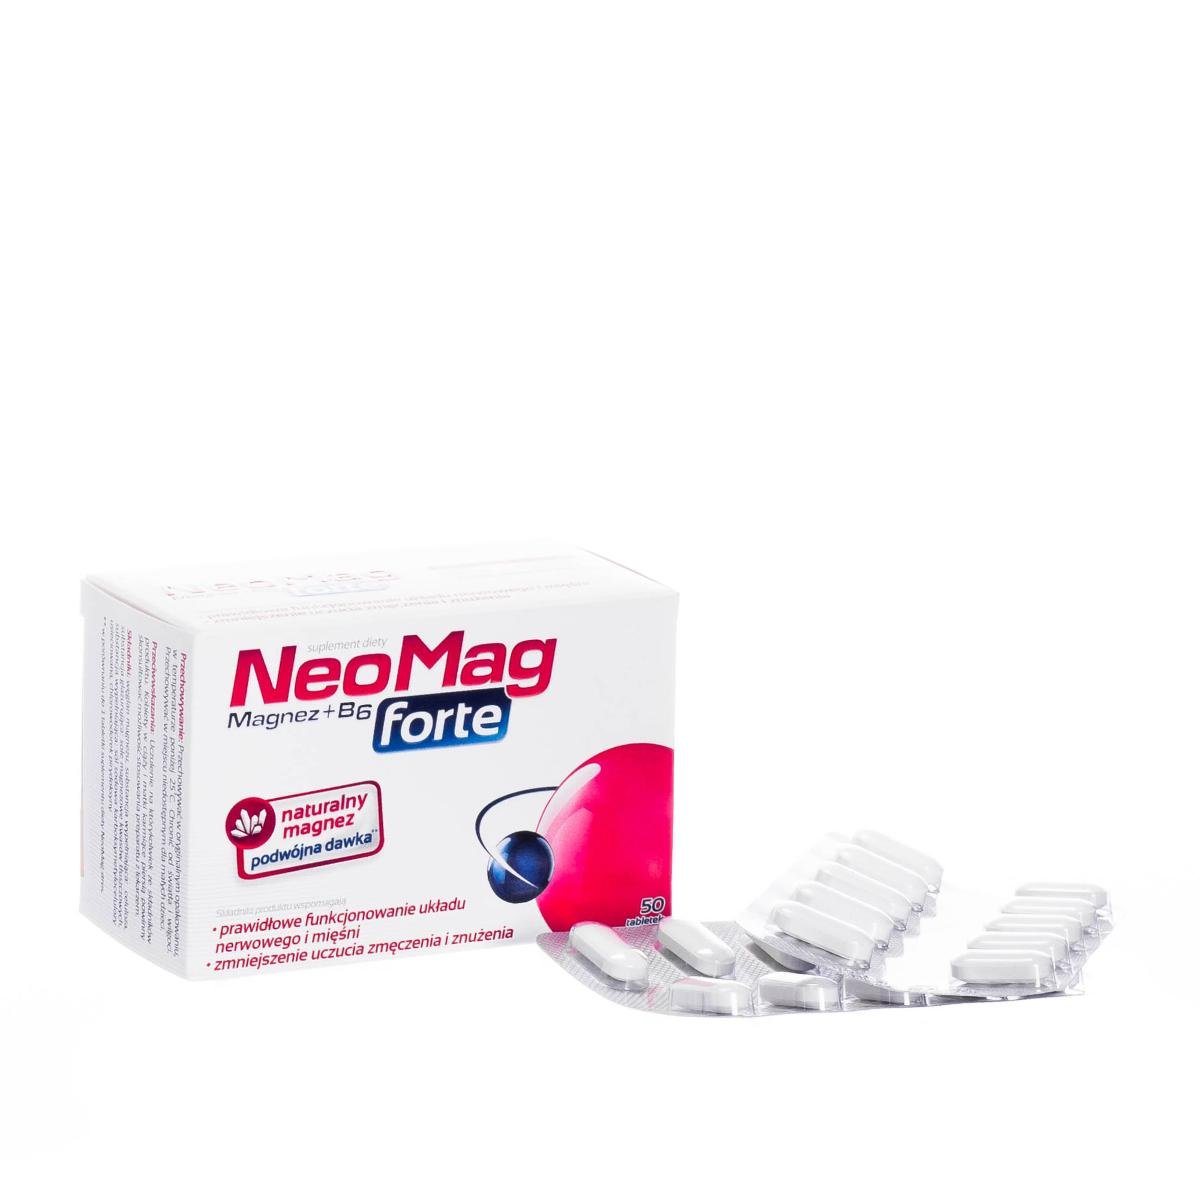 Aflofarm FABRYKA LEKÓW SP.Z O.O. NeoMag Forte Magnez + B6 50 tabletek